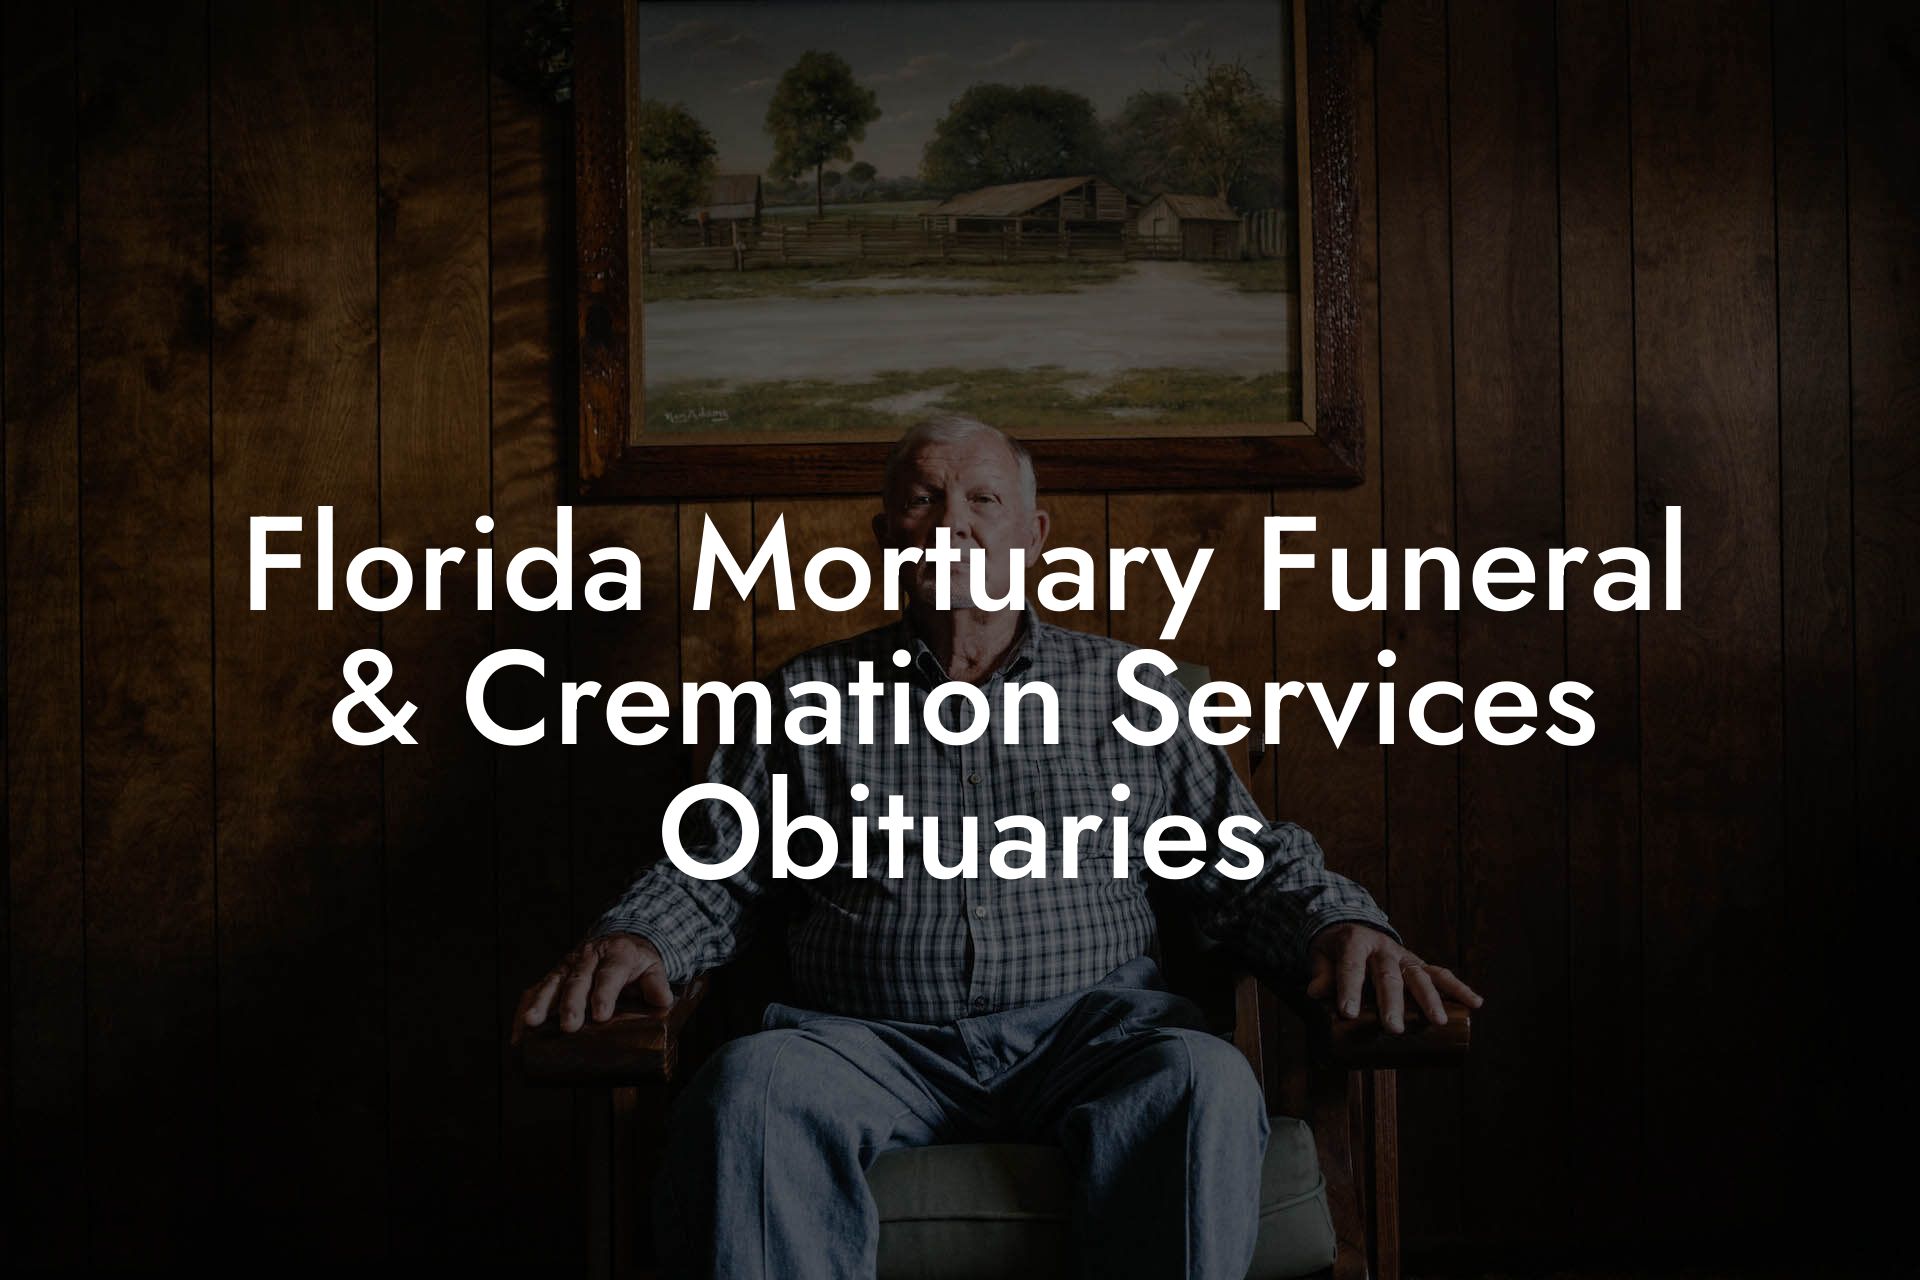 Florida Mortuary Funeral & Cremation Services Obituaries